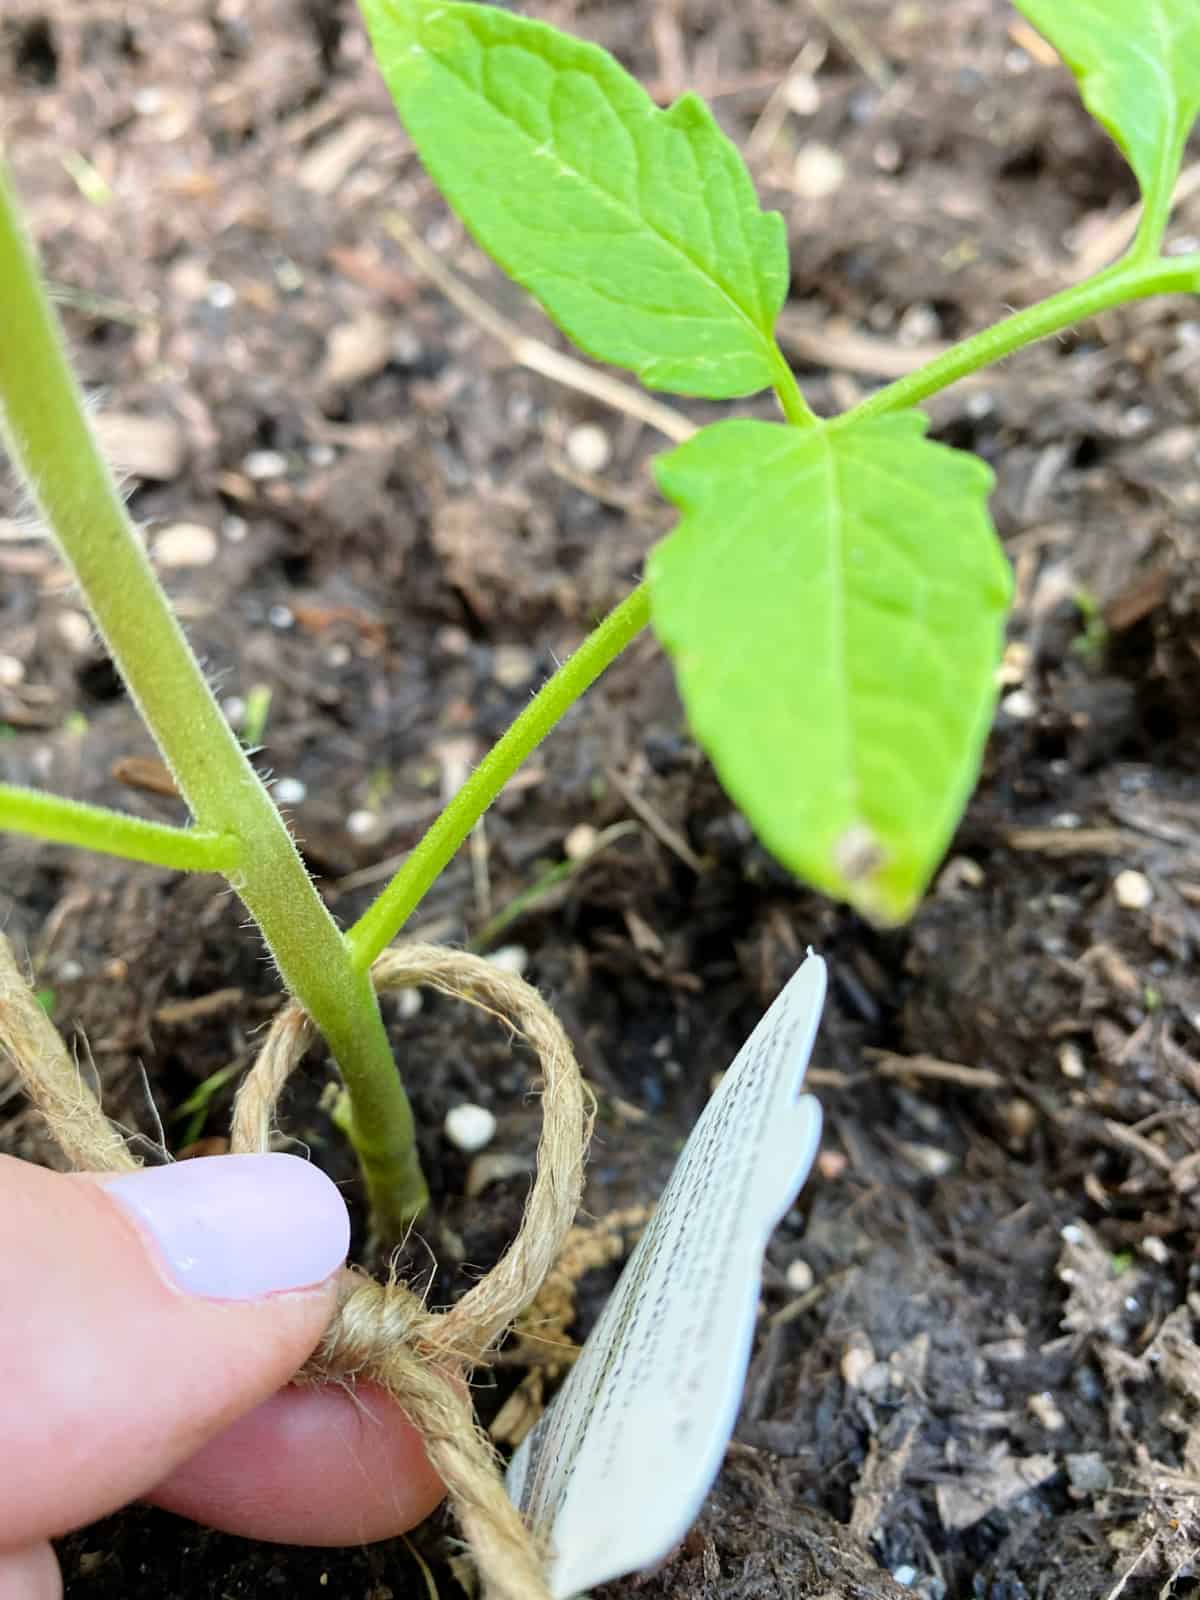 twine tied around small tomato plant